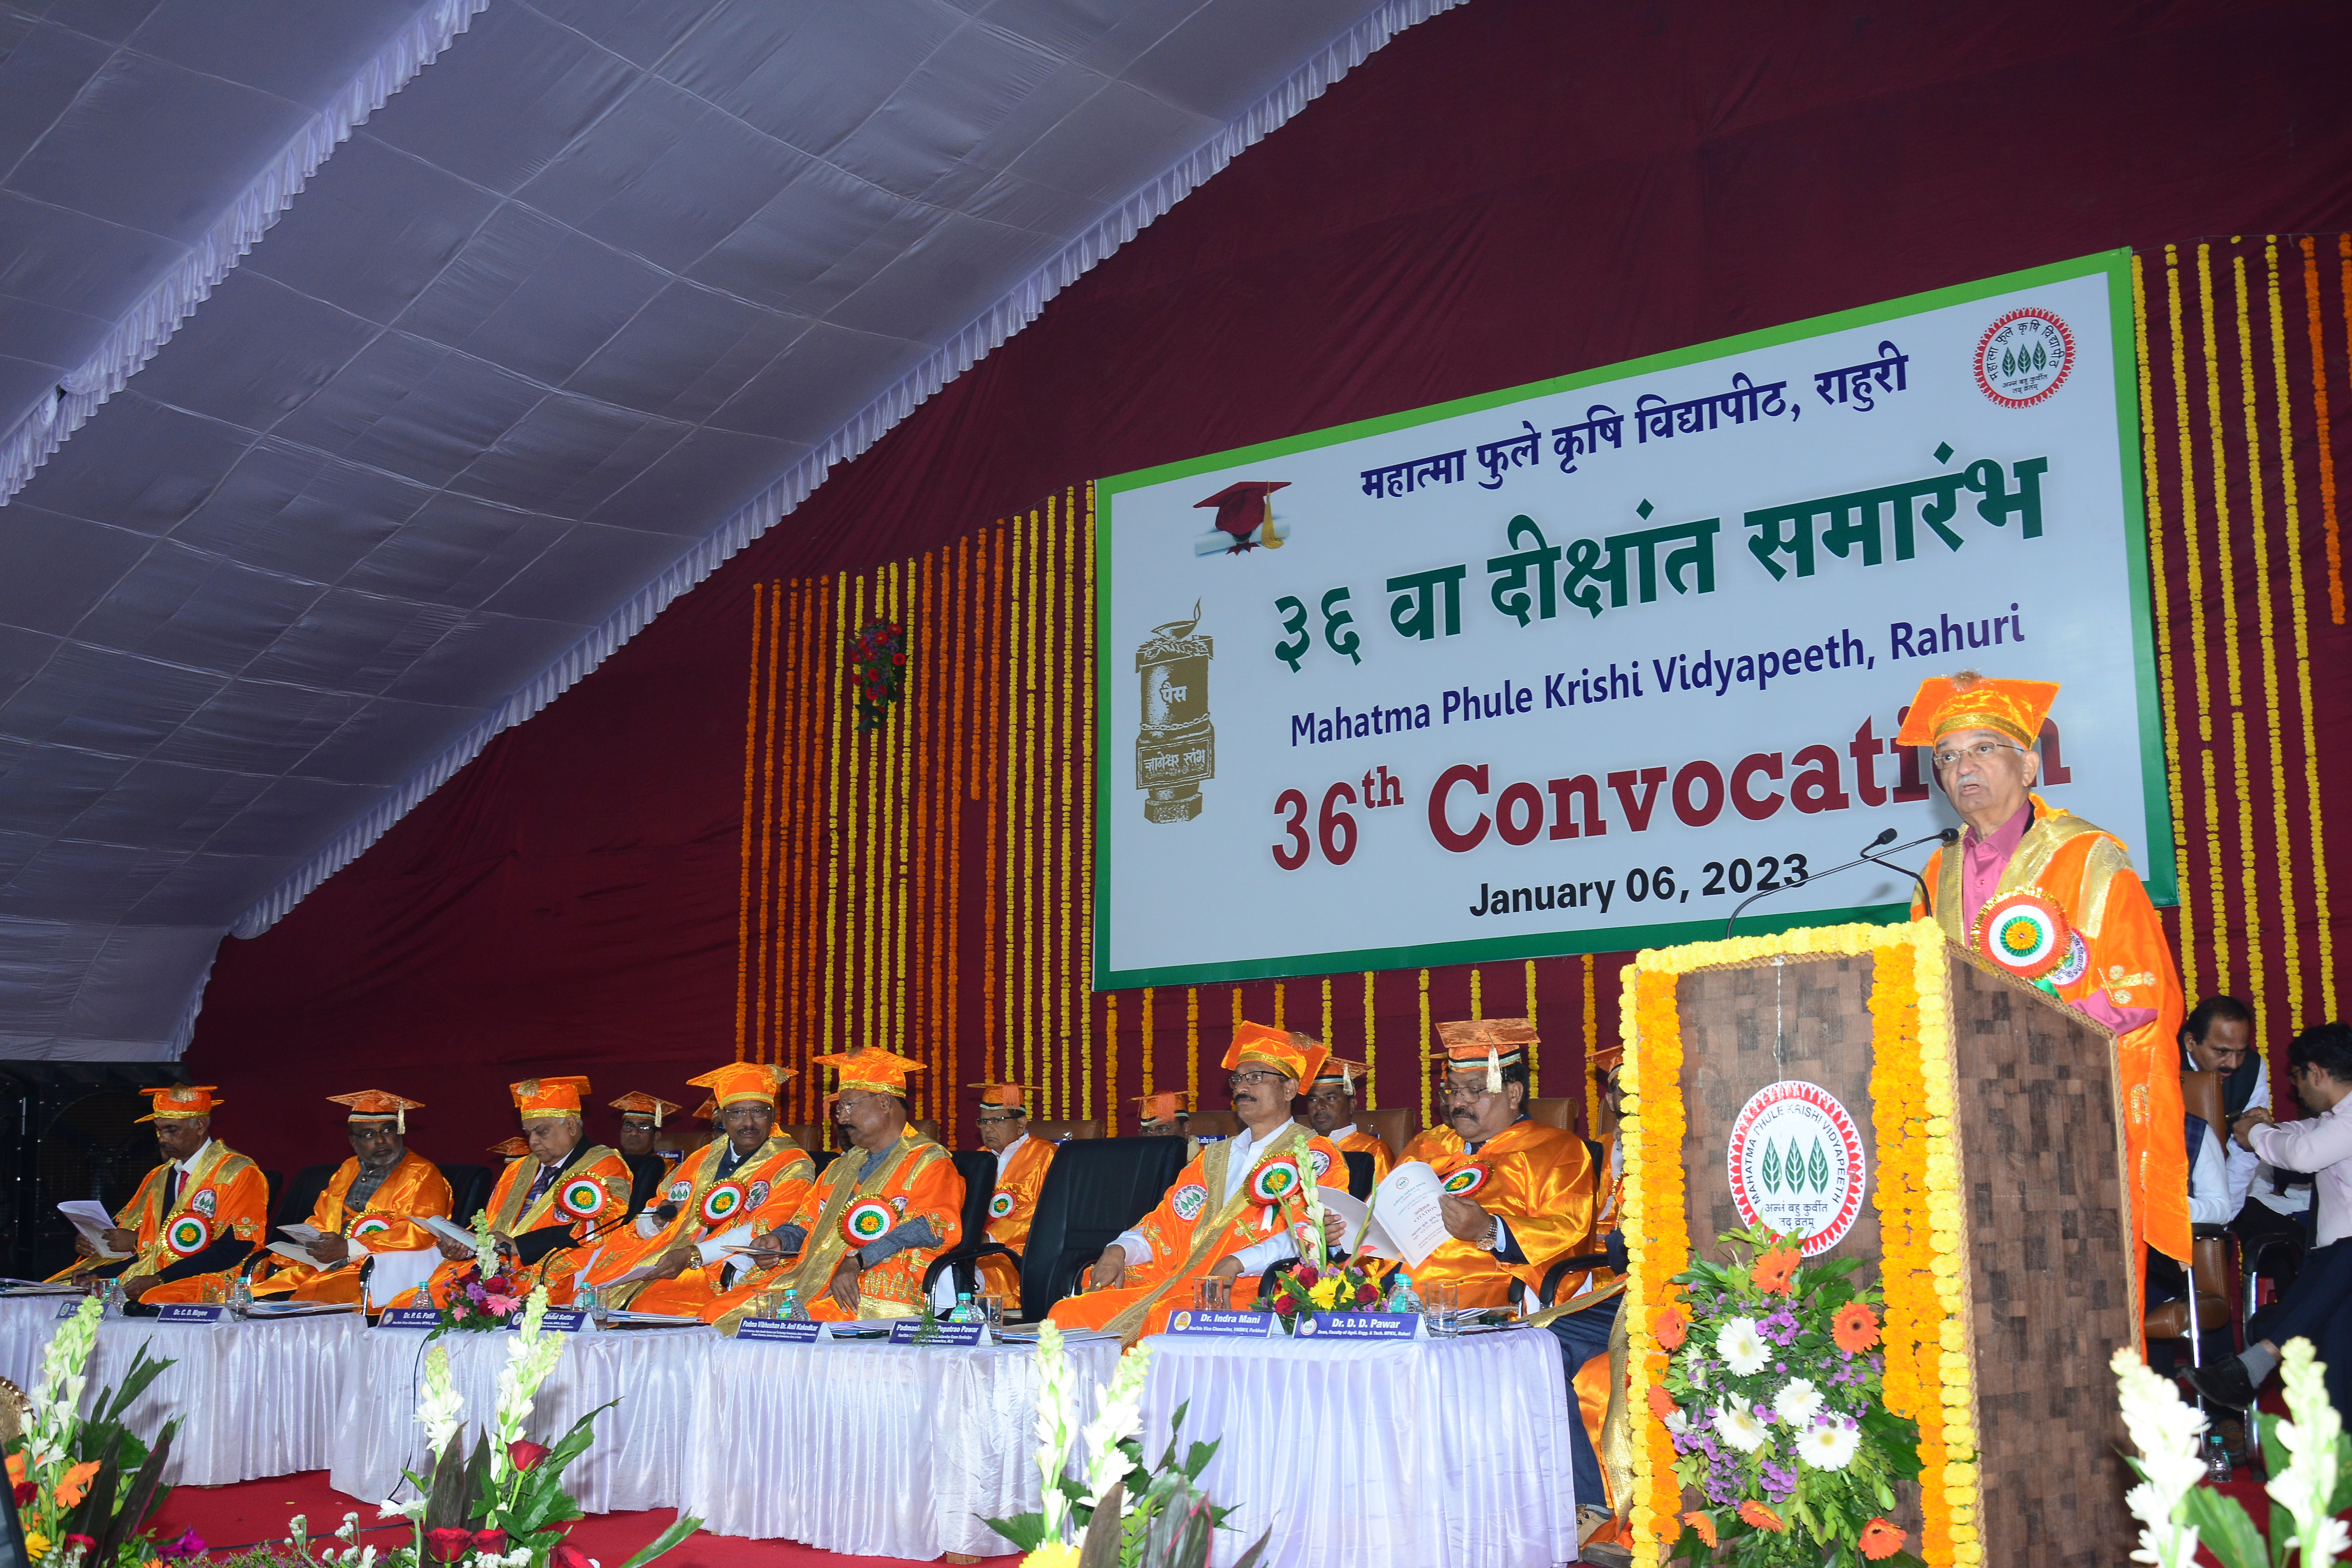 36th Convocation of MPKV, Rahuri-6-1-2023